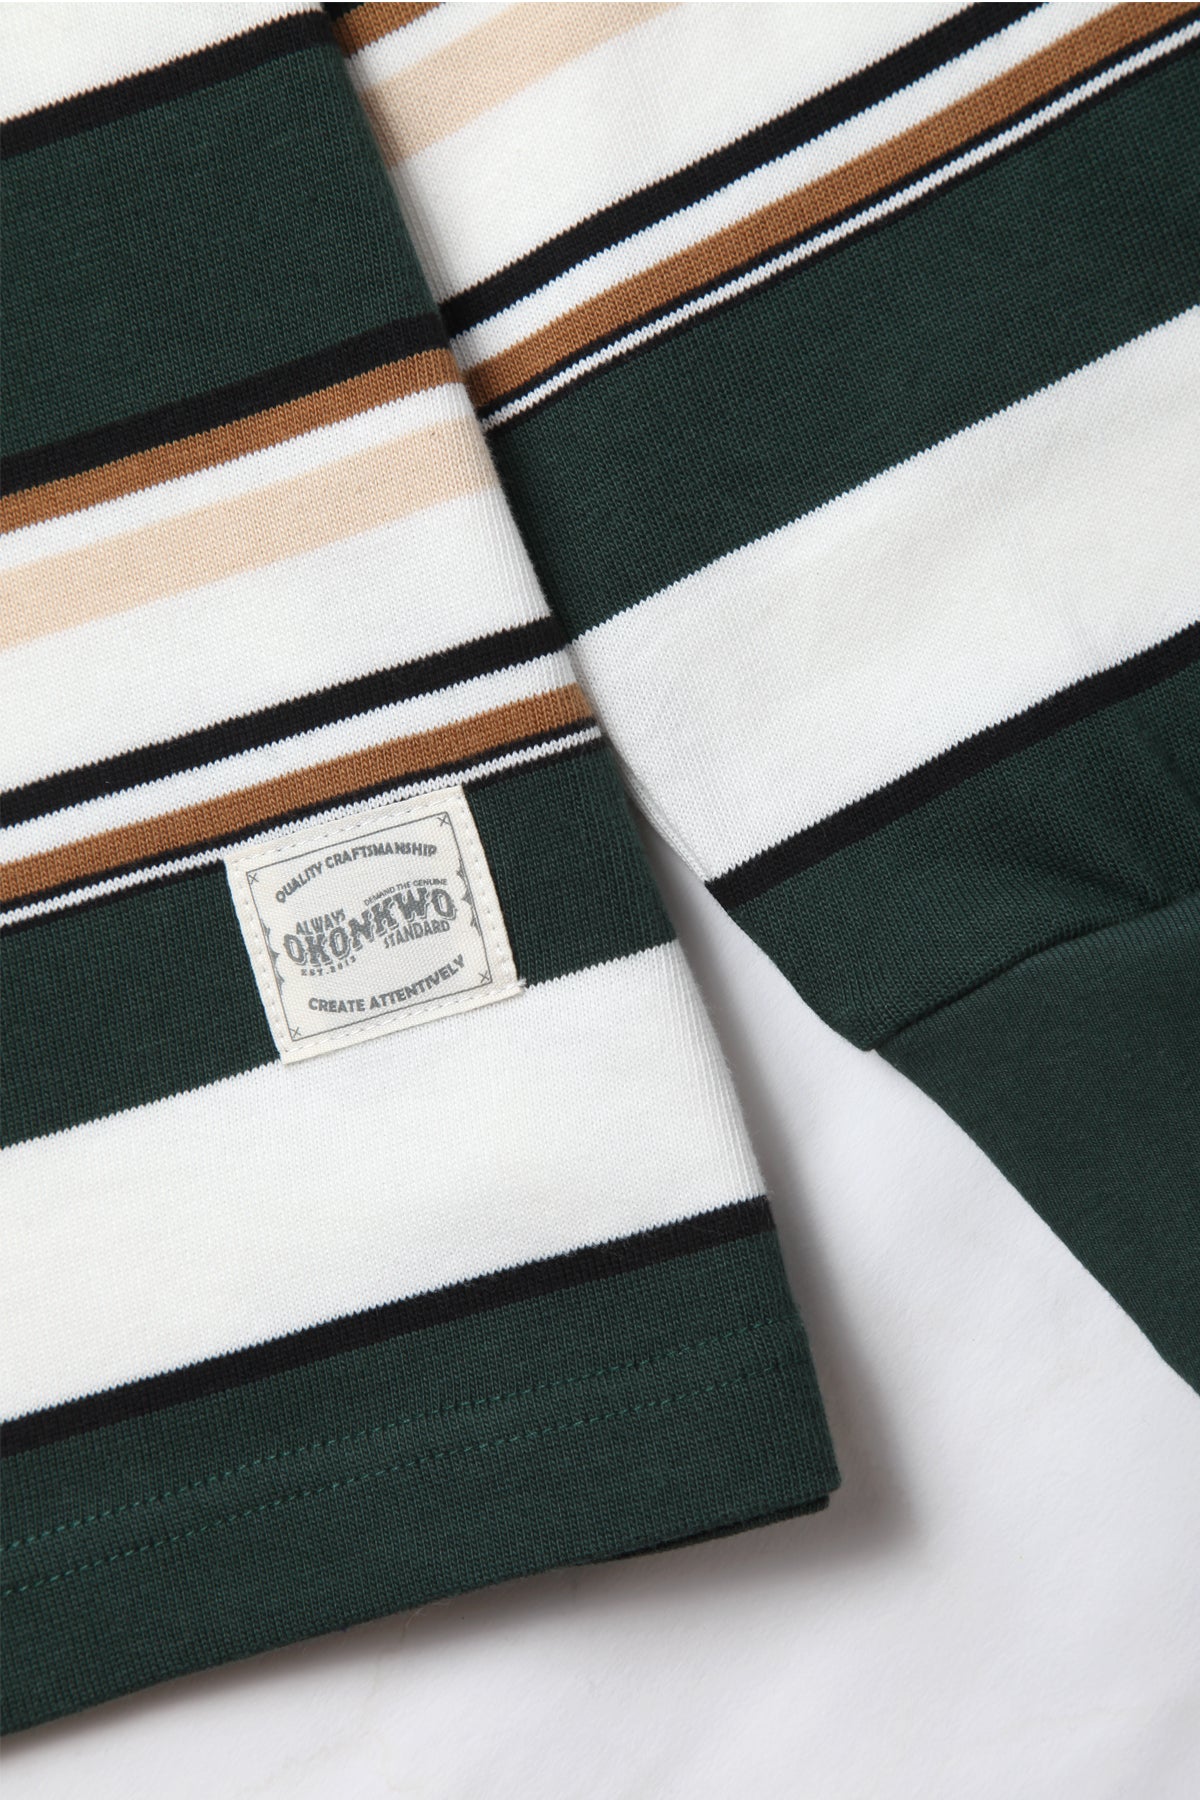 Okonkwo MFG - Long Sleeve Striped Tee - Green/White